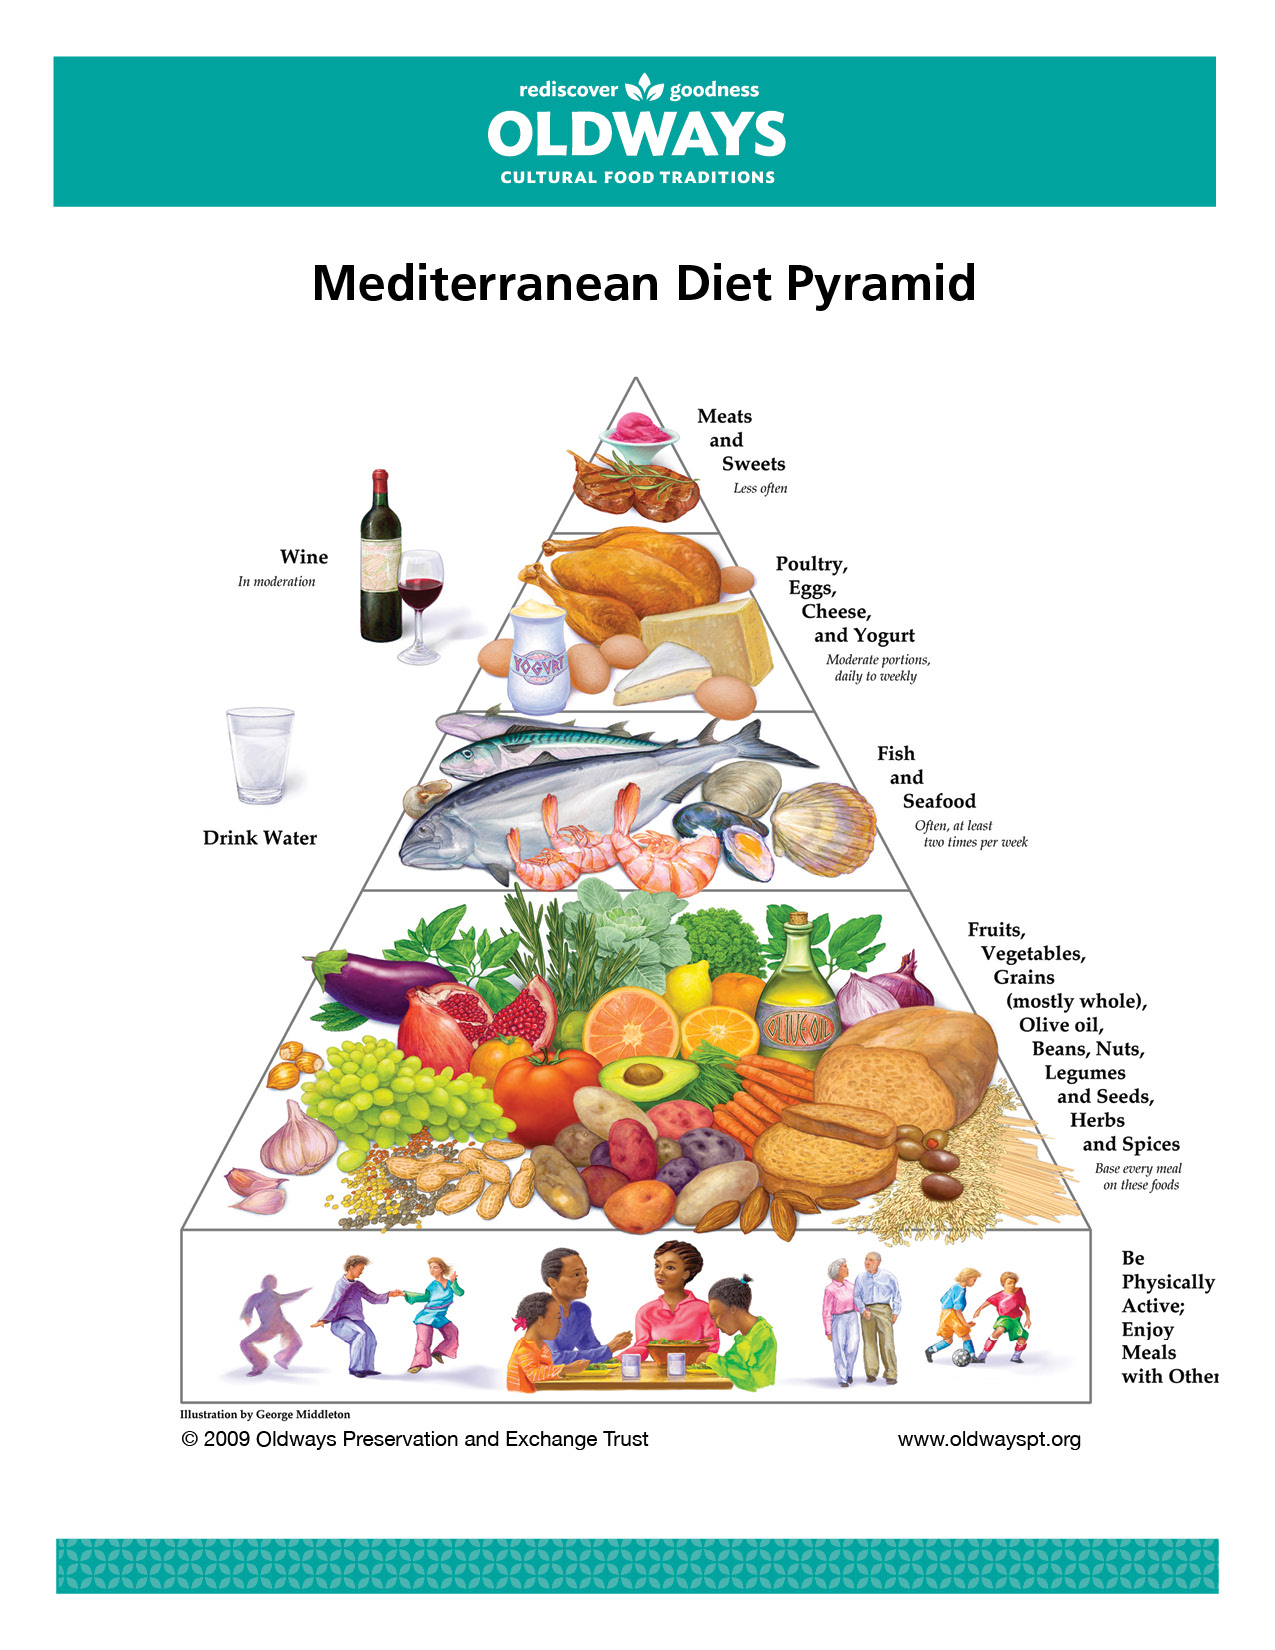 The 10 Week Mediterranean Diet Weight Loss Program